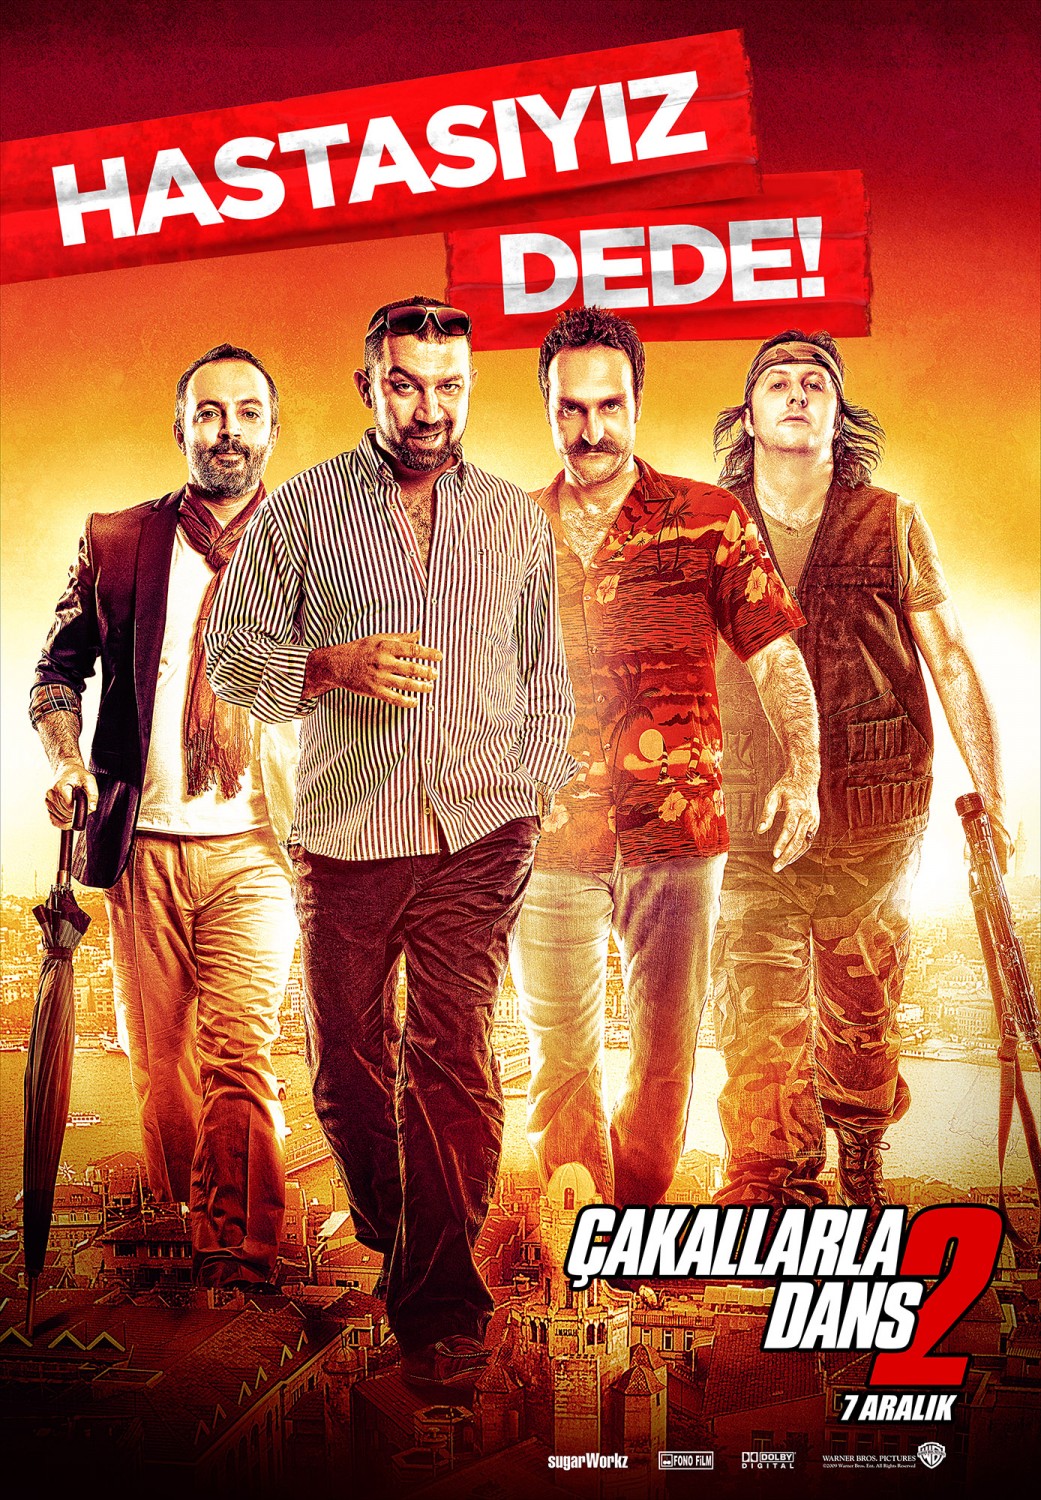 Extra Large Movie Poster Image for Çakallarla dans 2 (#9 of 9)